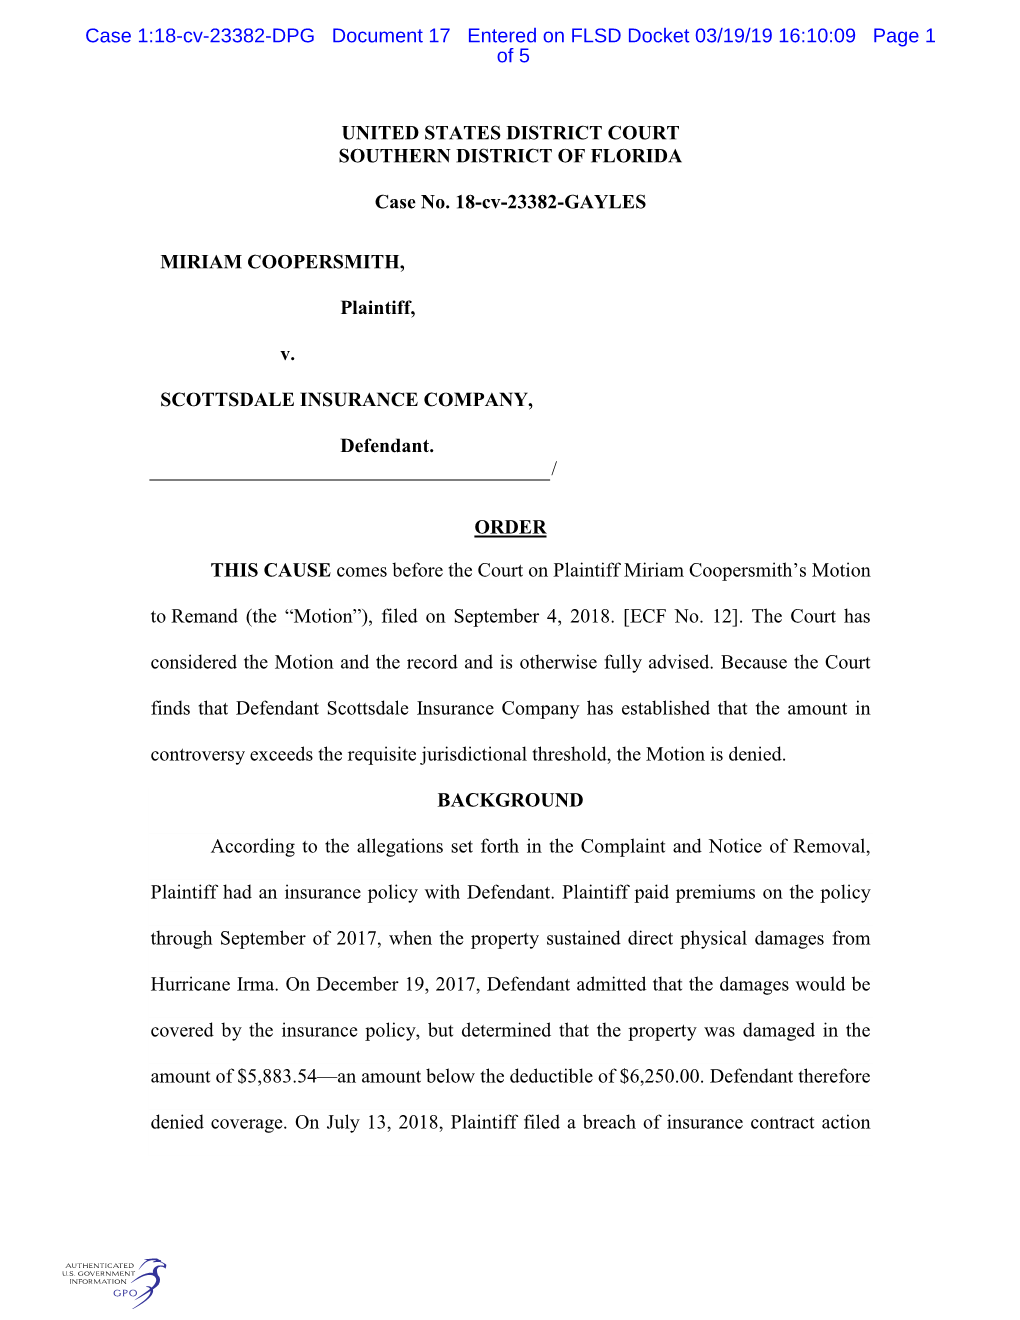 UNITED STATES DISTRICT COURT SOUTHERN DISTRICT of FLORIDA Case No. 18-Cv-23382-GAYLES MIRIAM COOPERSMITH, Plaintiff, V. SCOTTSDA